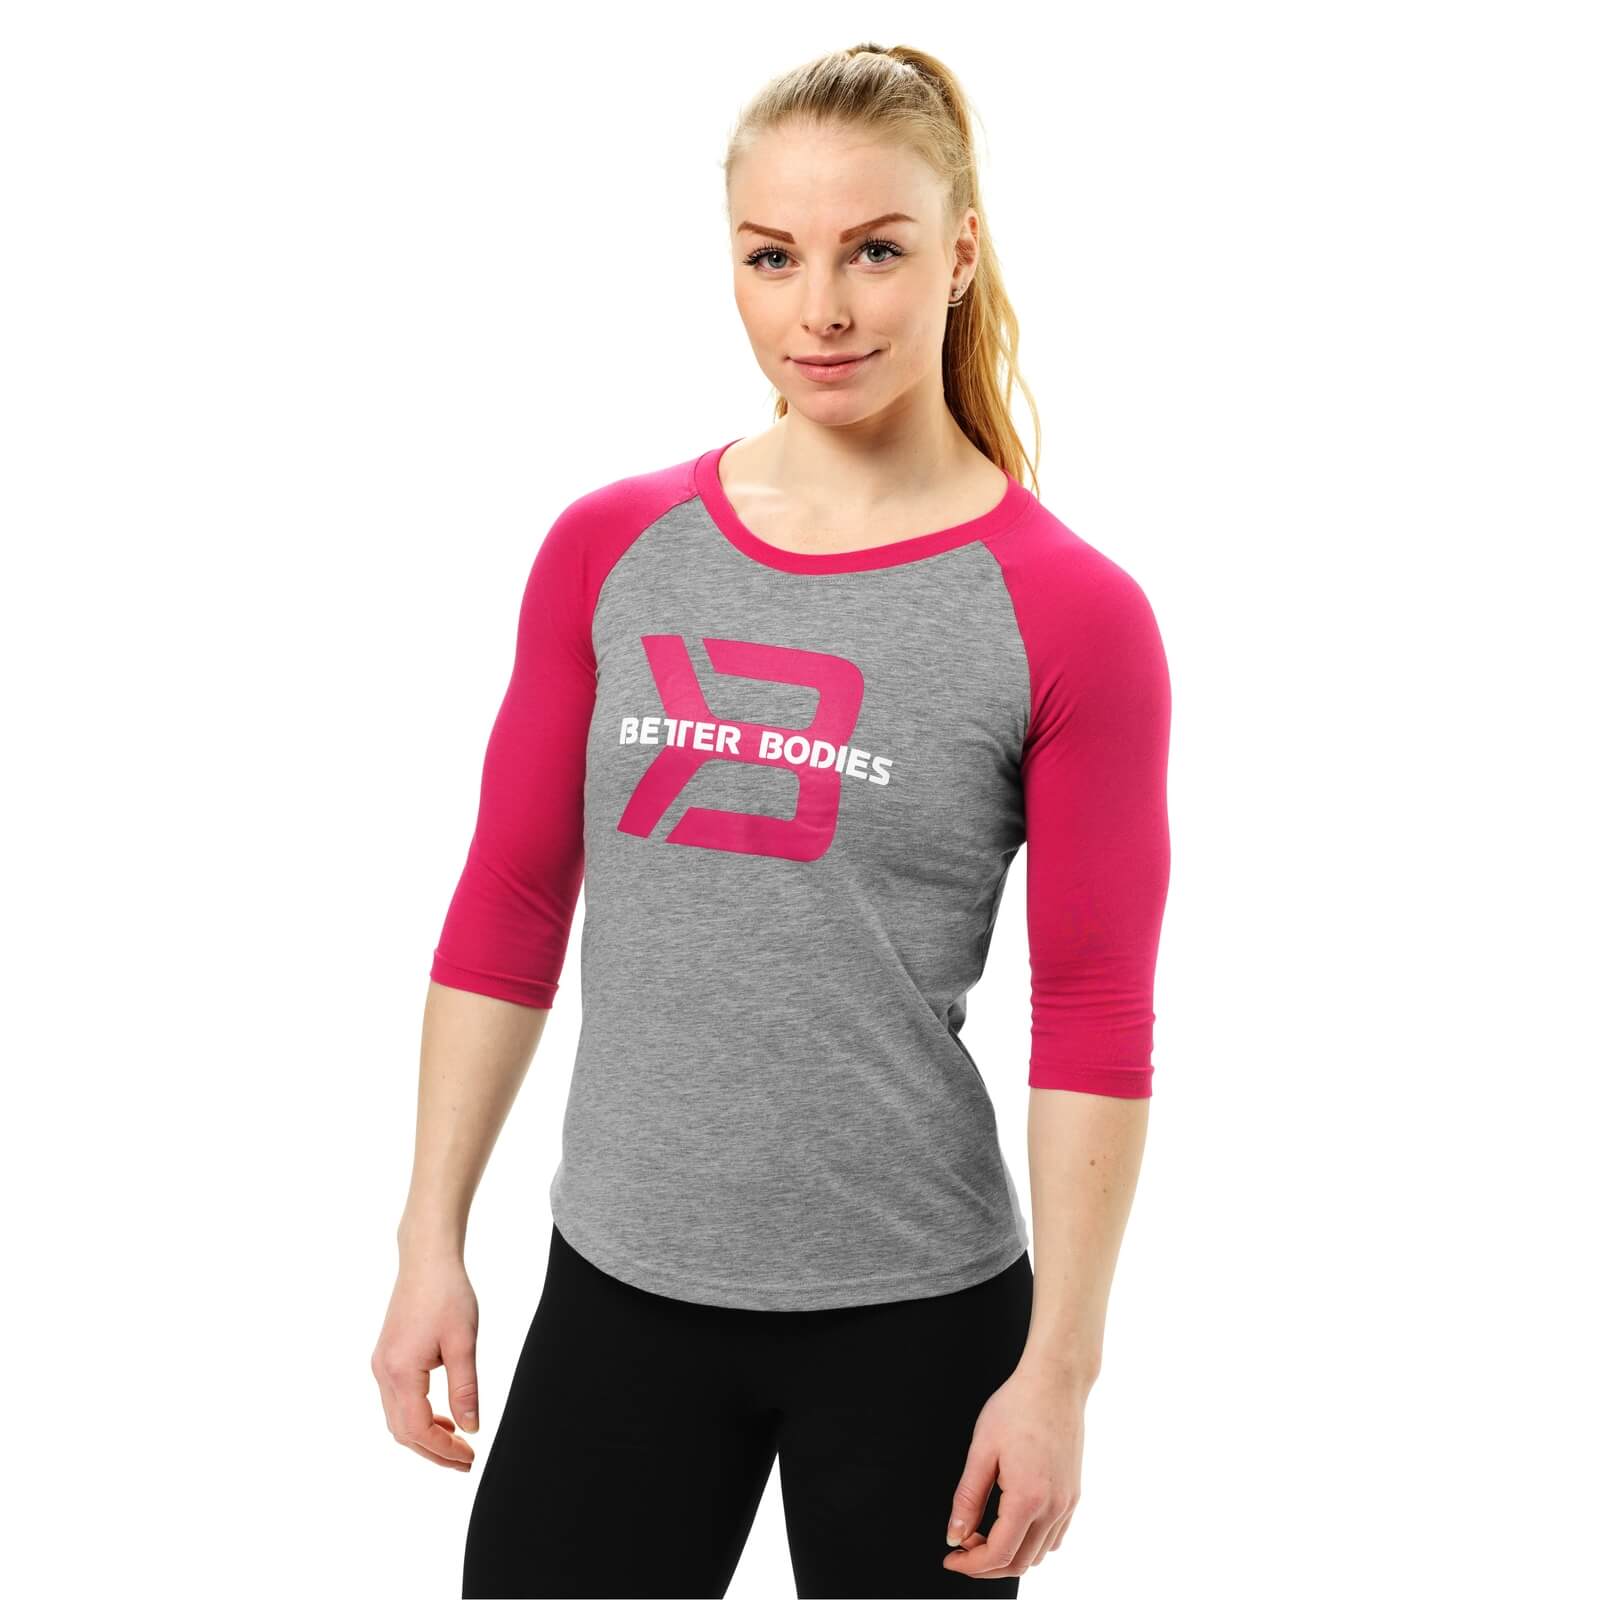 Women's Baseball Tee, grey melange/pink, Better Bodies